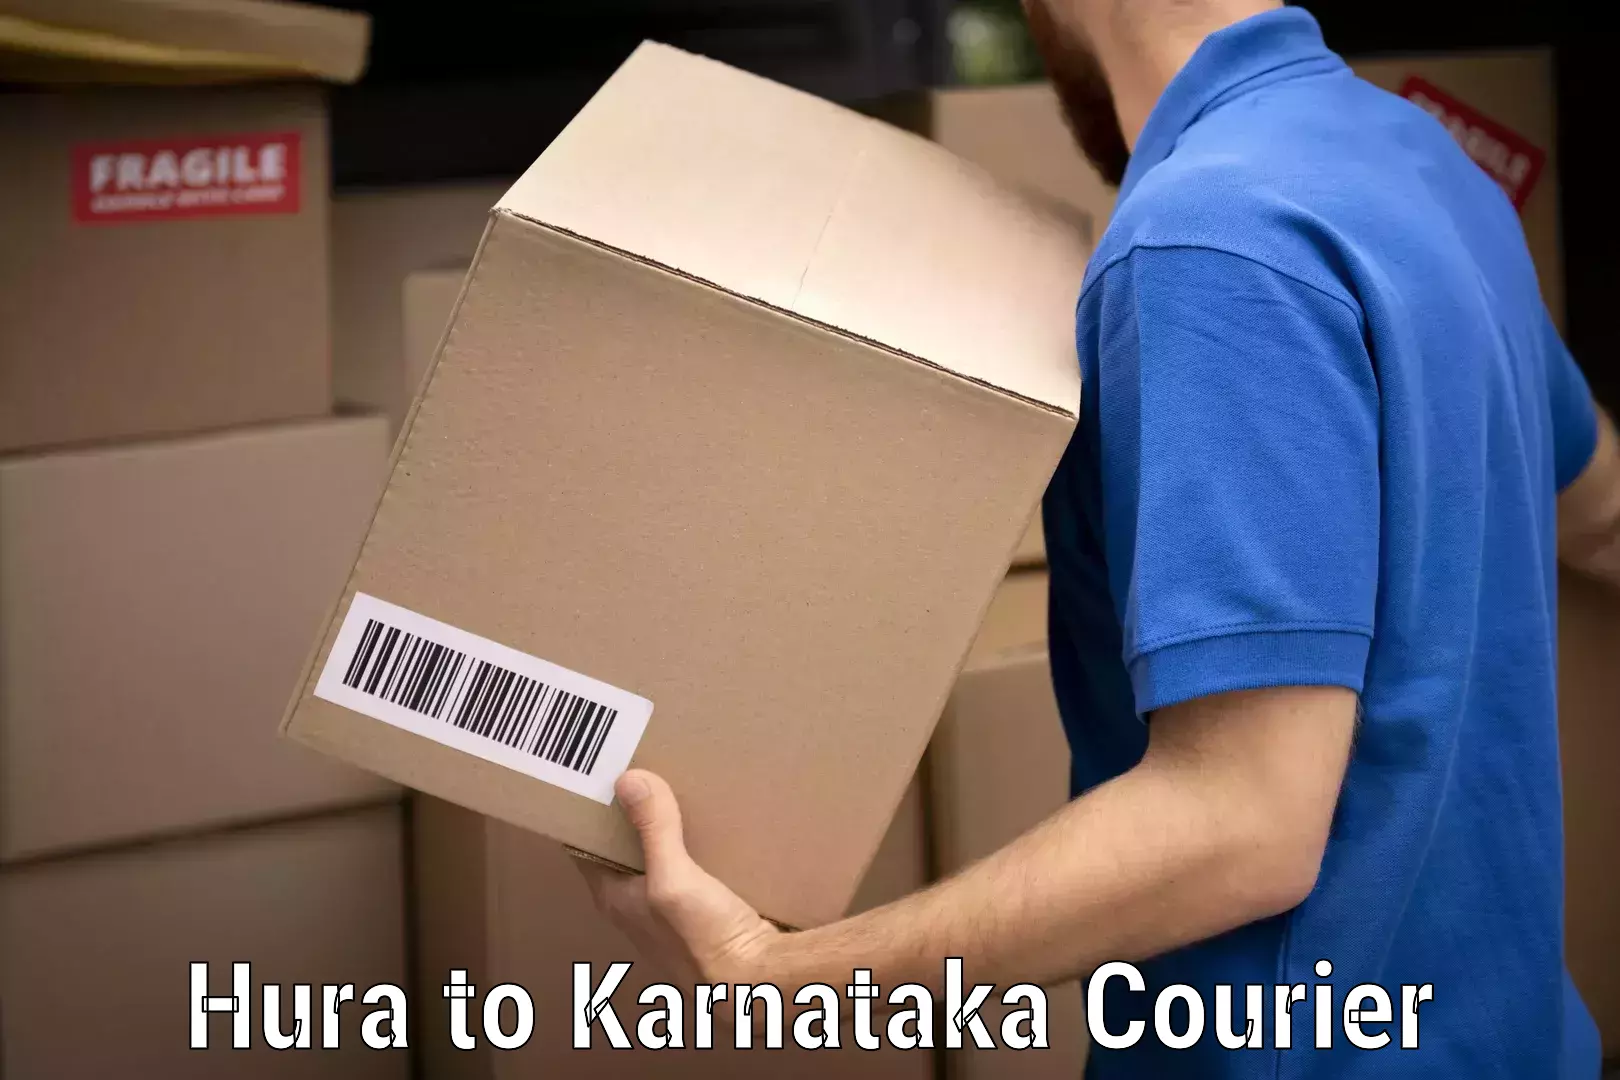 Budget-friendly movers Hura to Karnataka